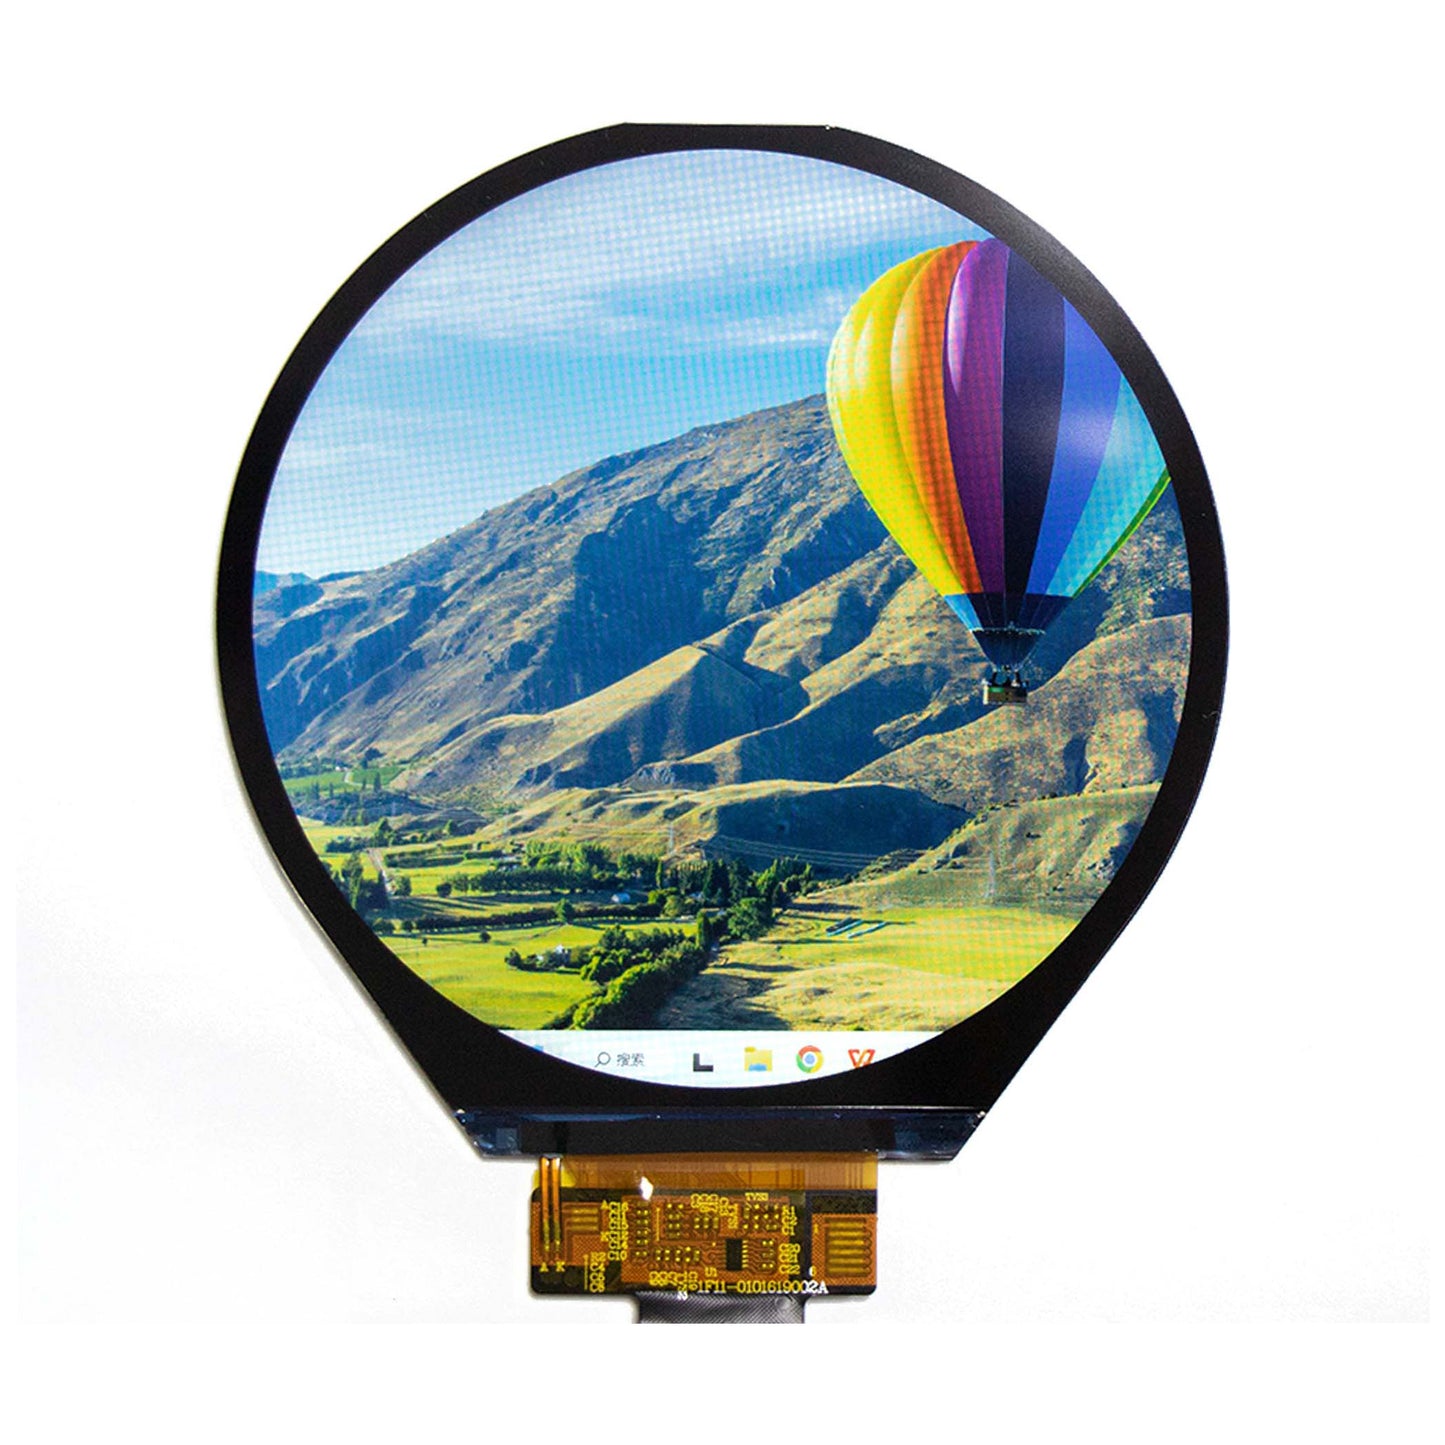 3.4" Round TFT Display 800x800 16.7M Colors - MIPI